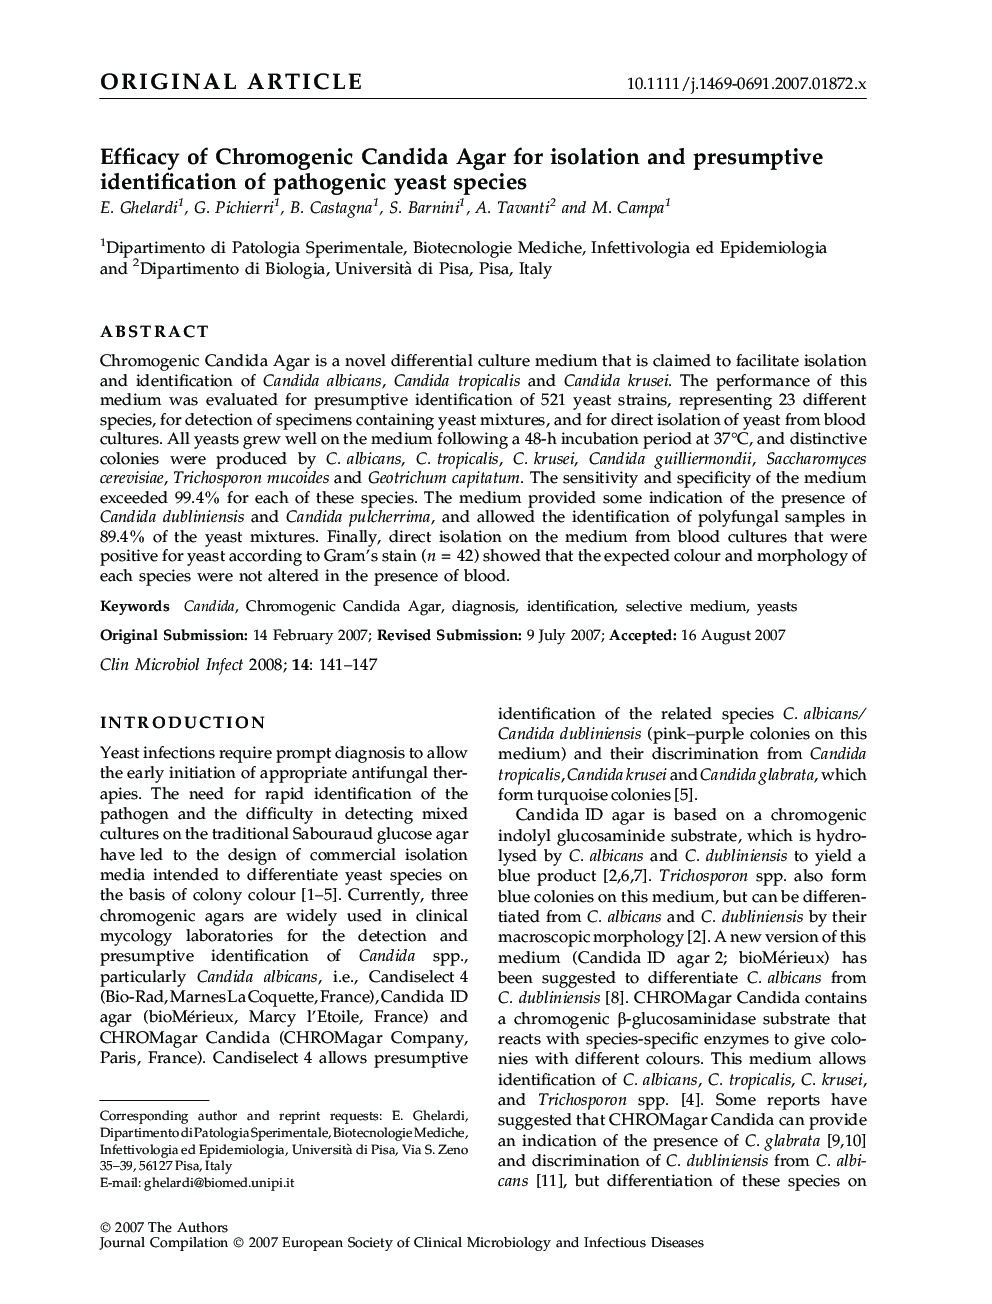 Efficacy of Chromogenic Candida Agar for isolation and presumptive identification of pathogenic yeast species